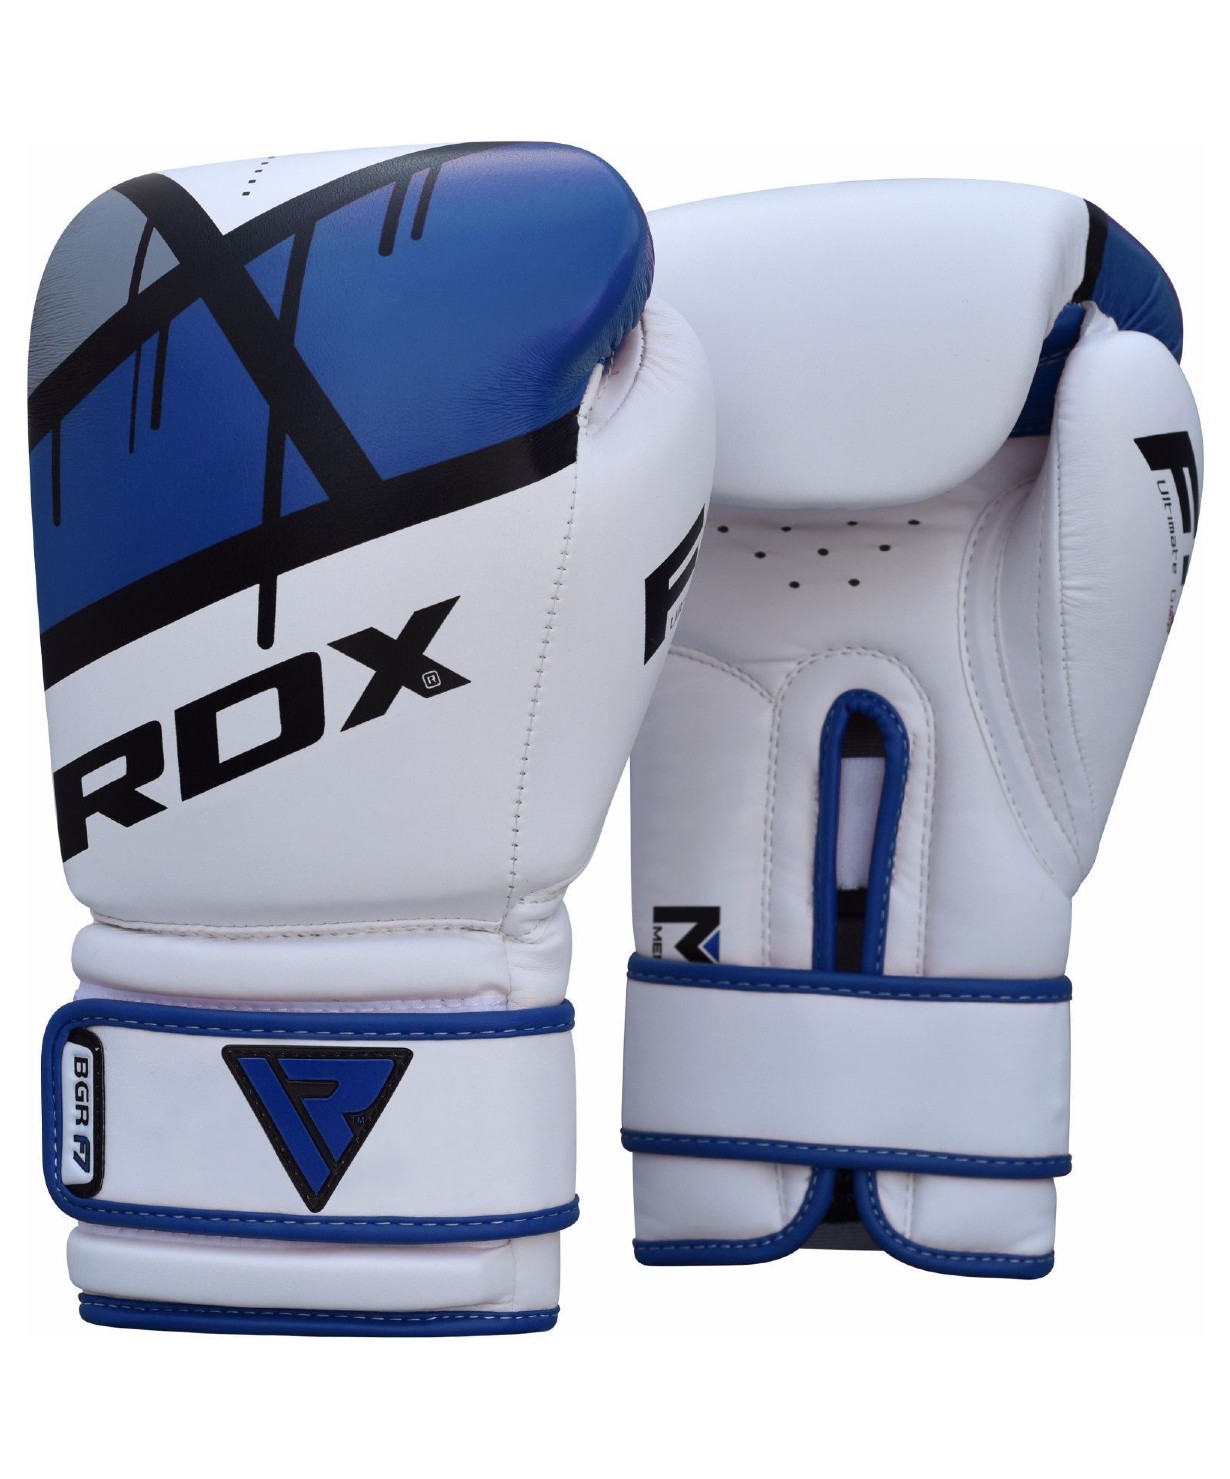 фото Rdx перчатки боксерские bgr-f7 blue bgr-f7u, 8 oz